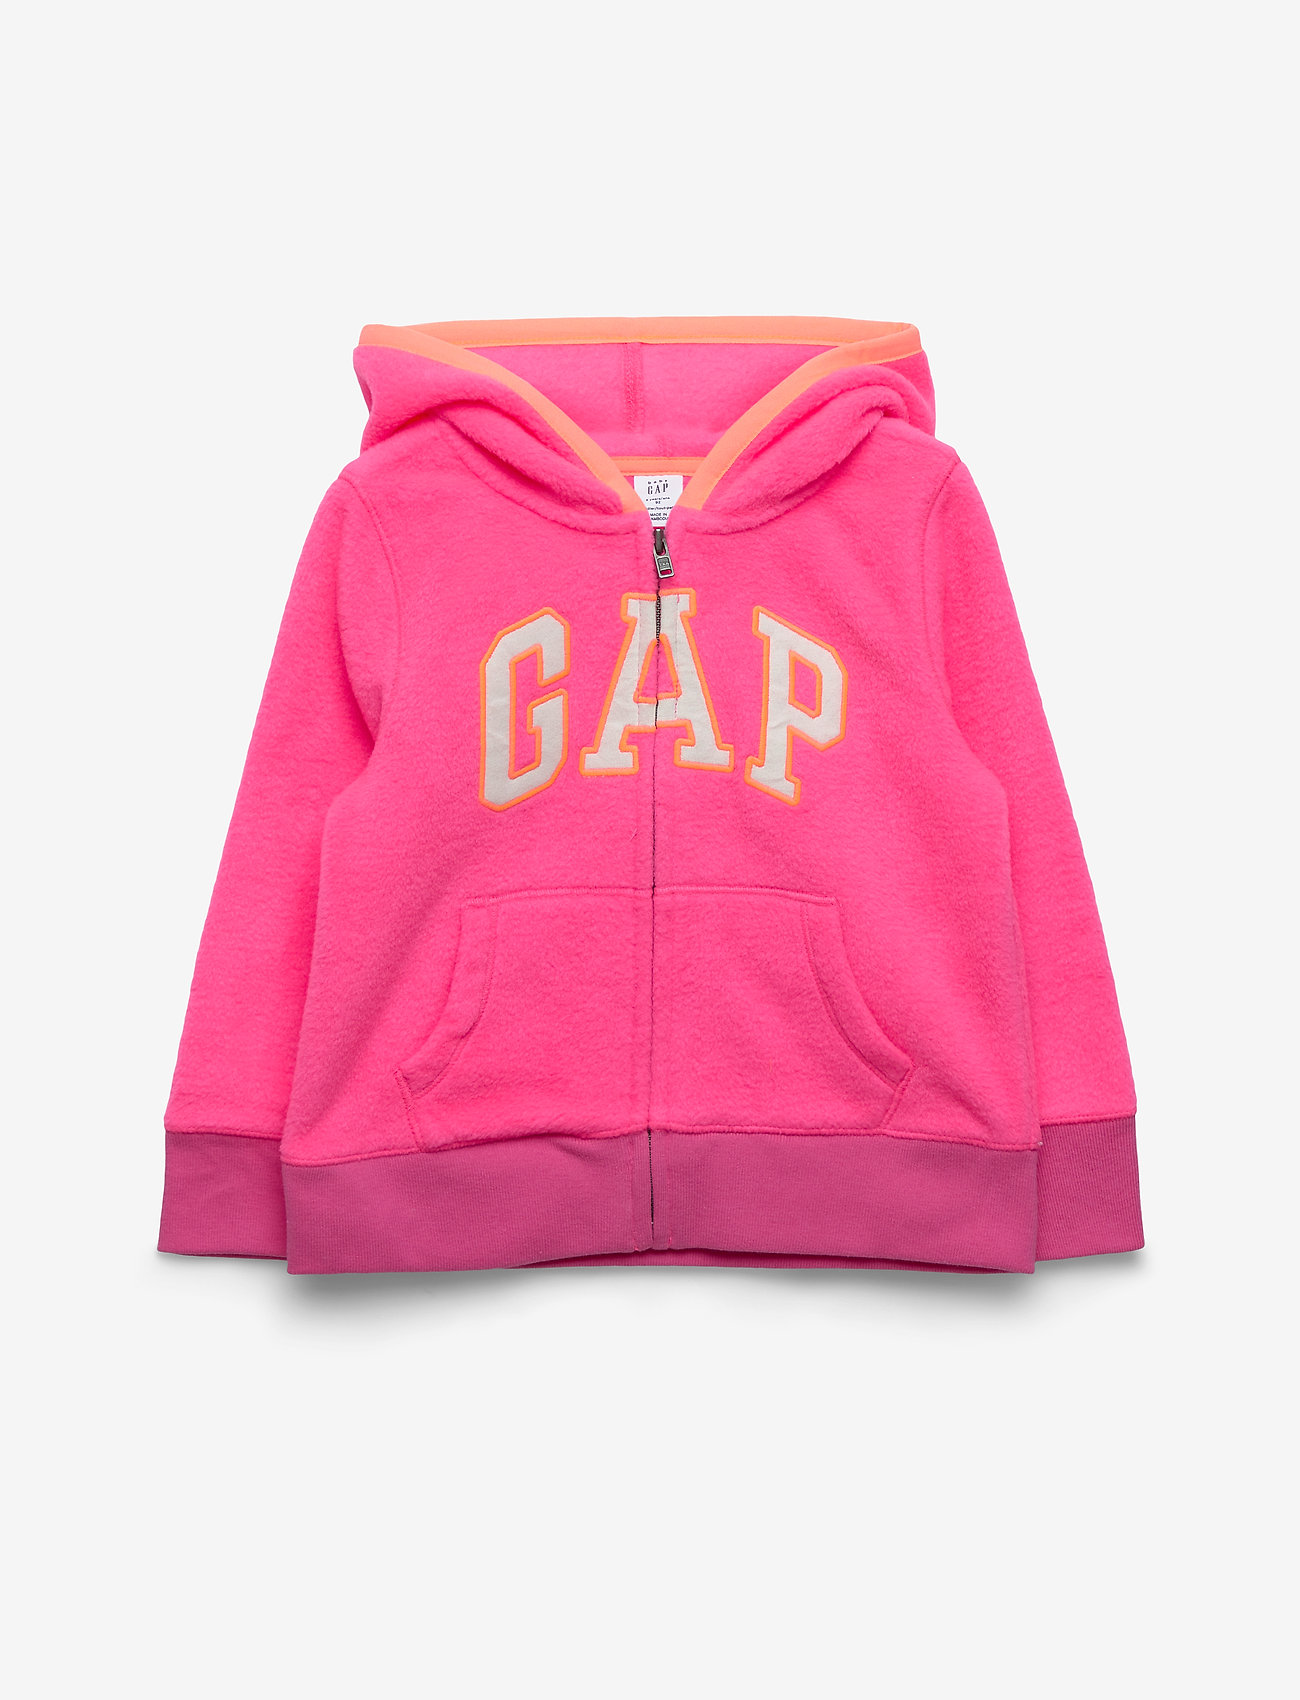 gap pink sweatshirt